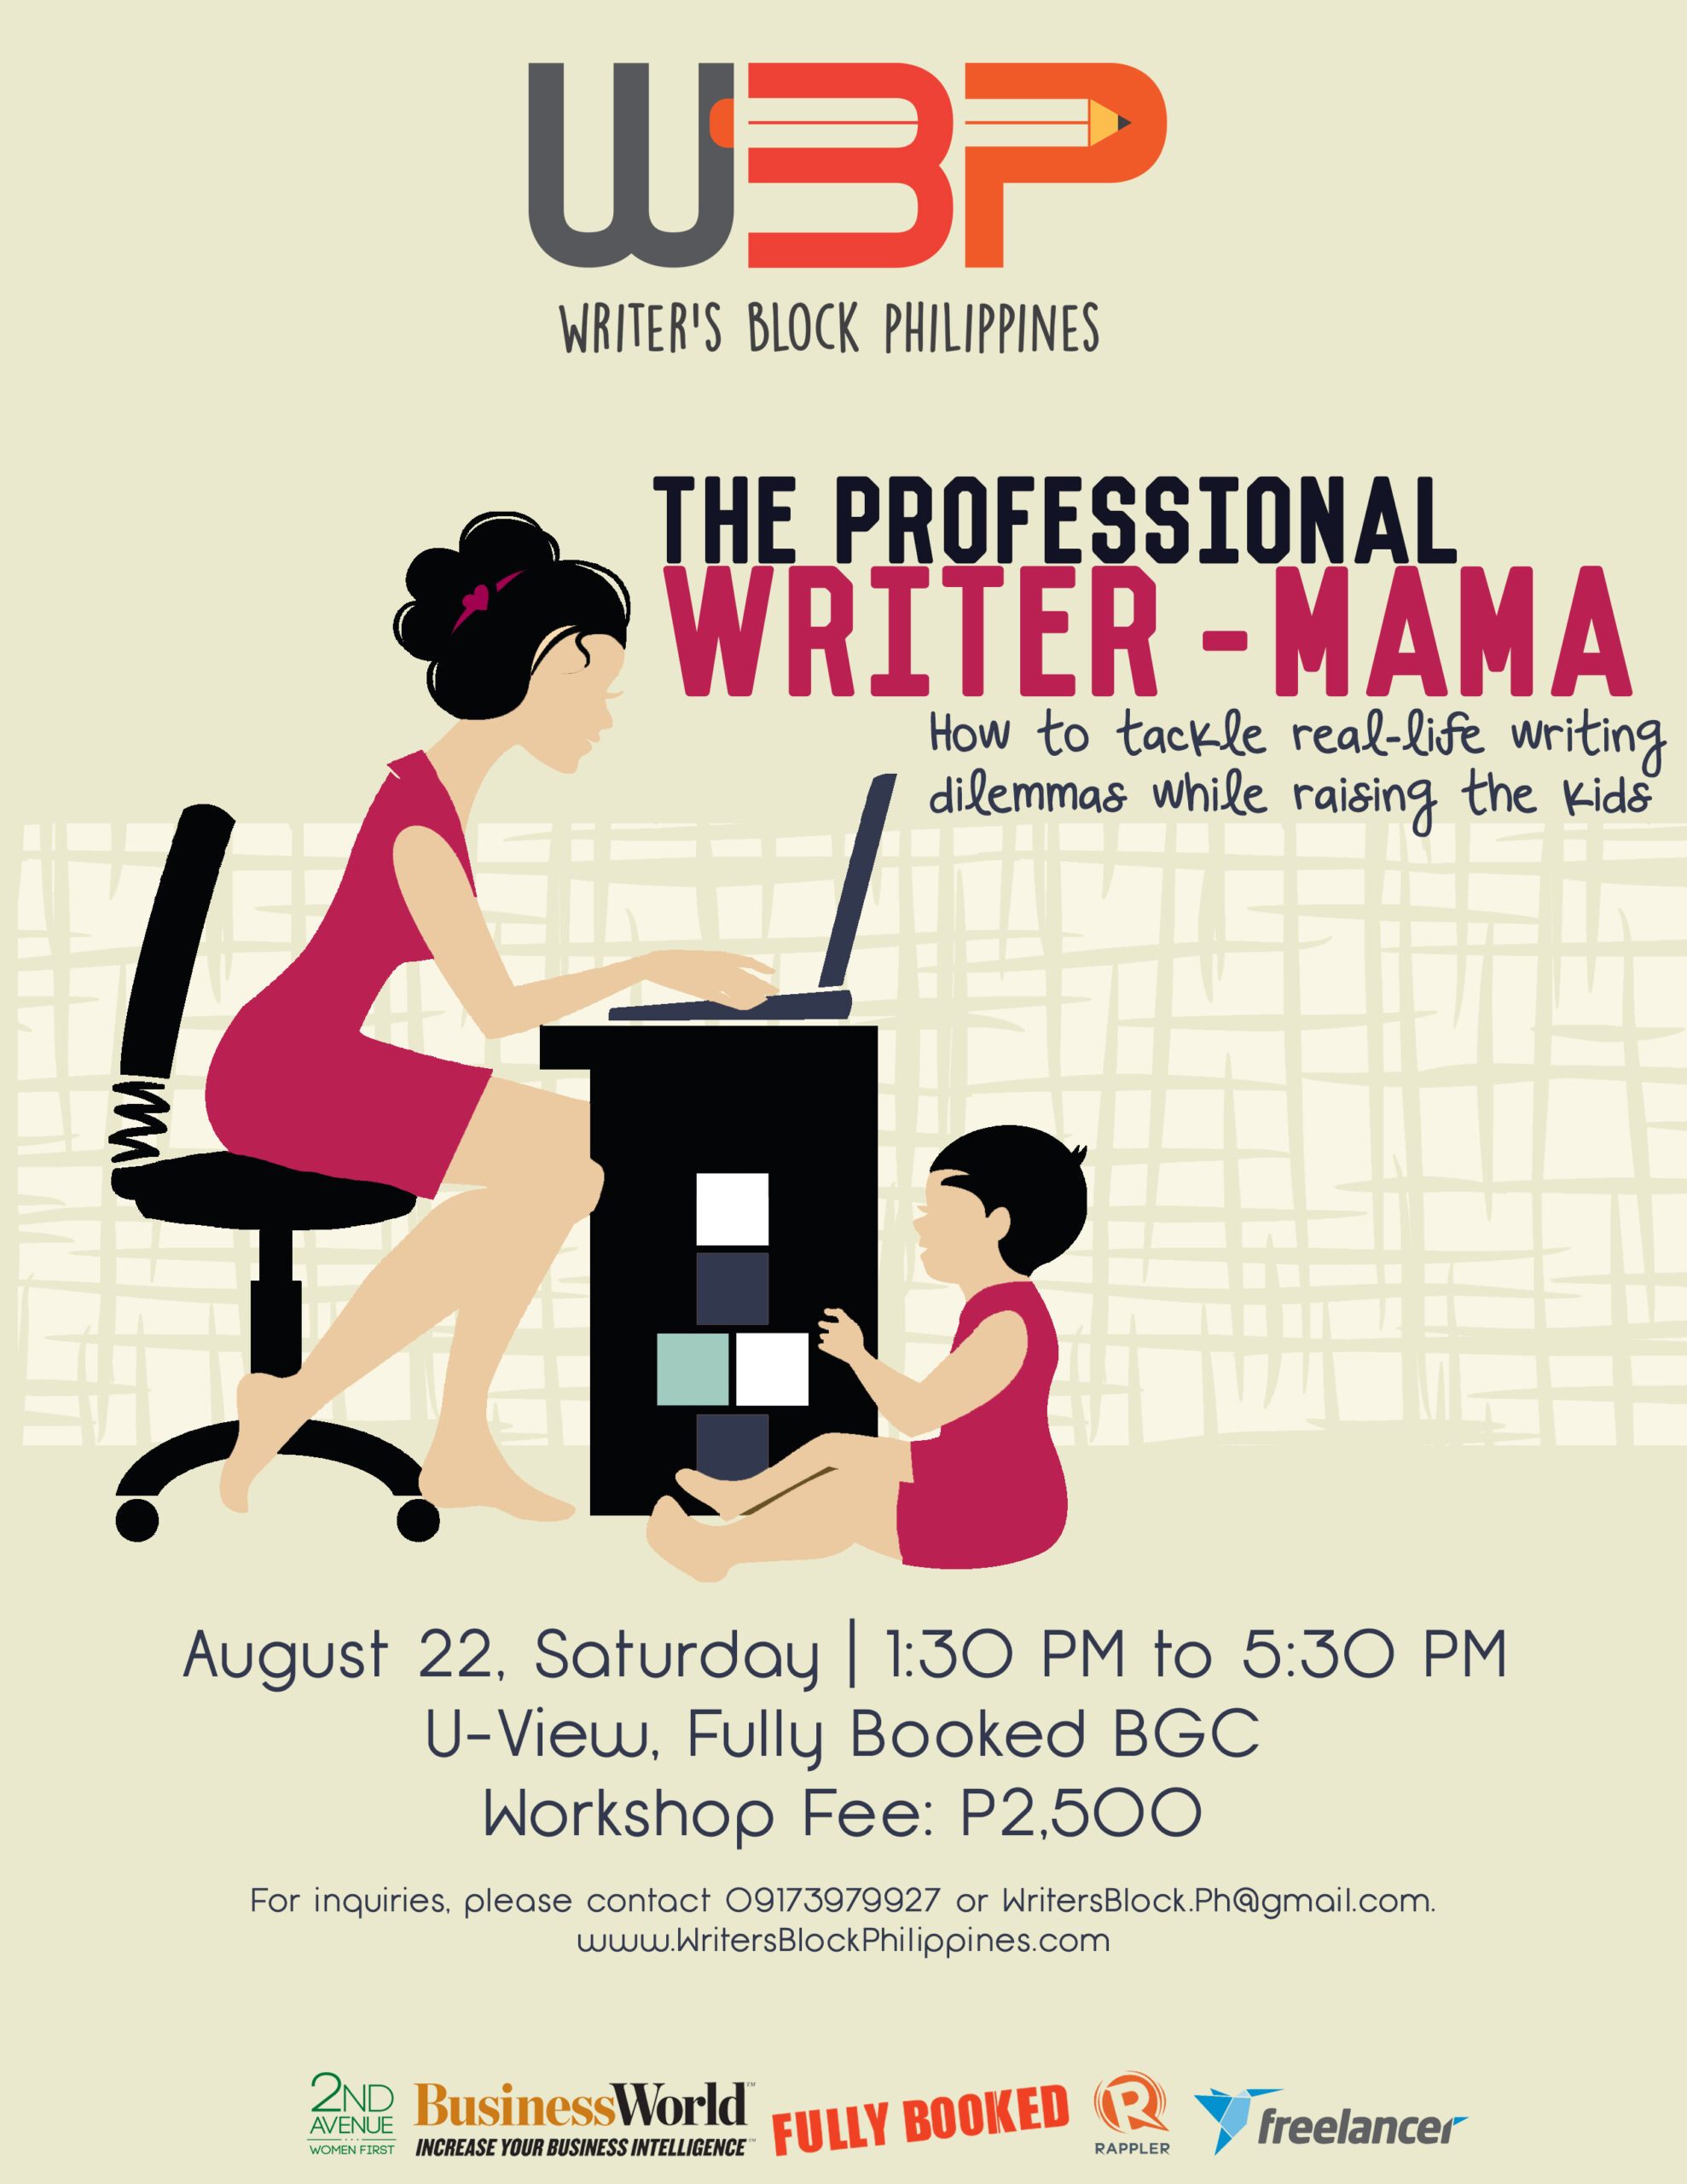 The professional writer-mama